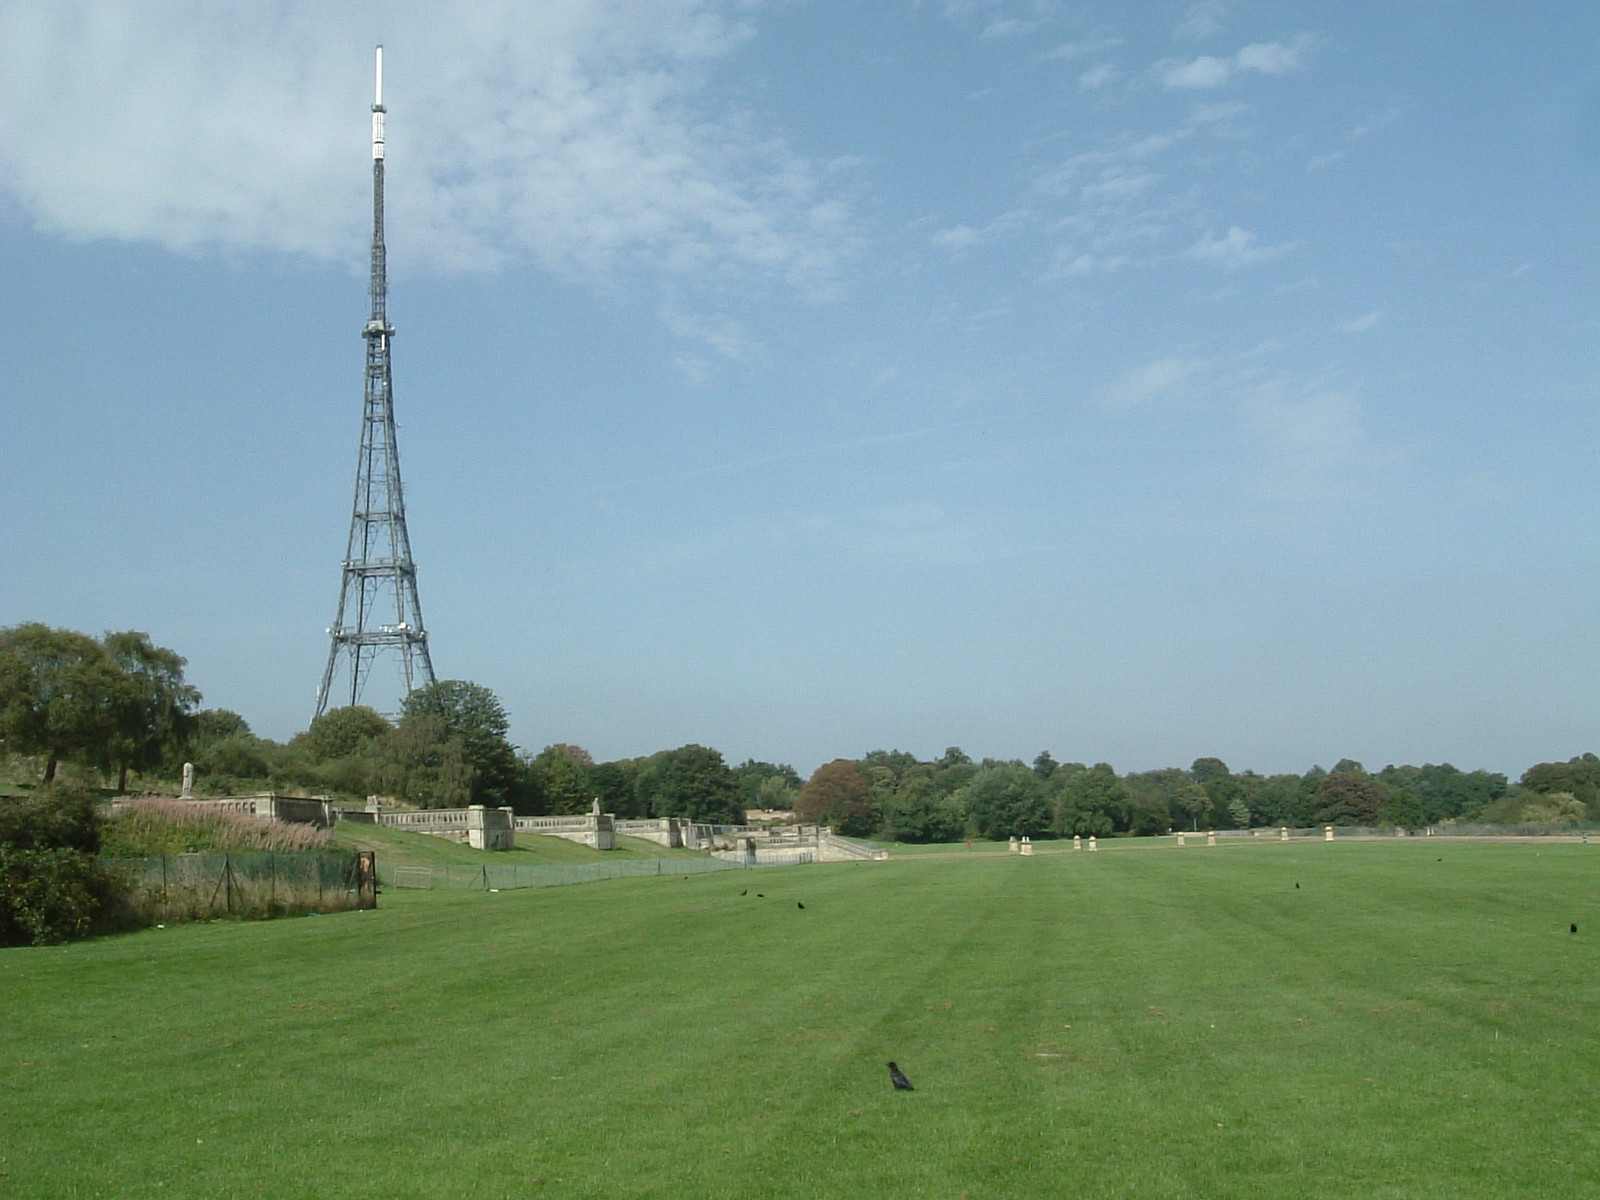 Crystal Palace transmitter